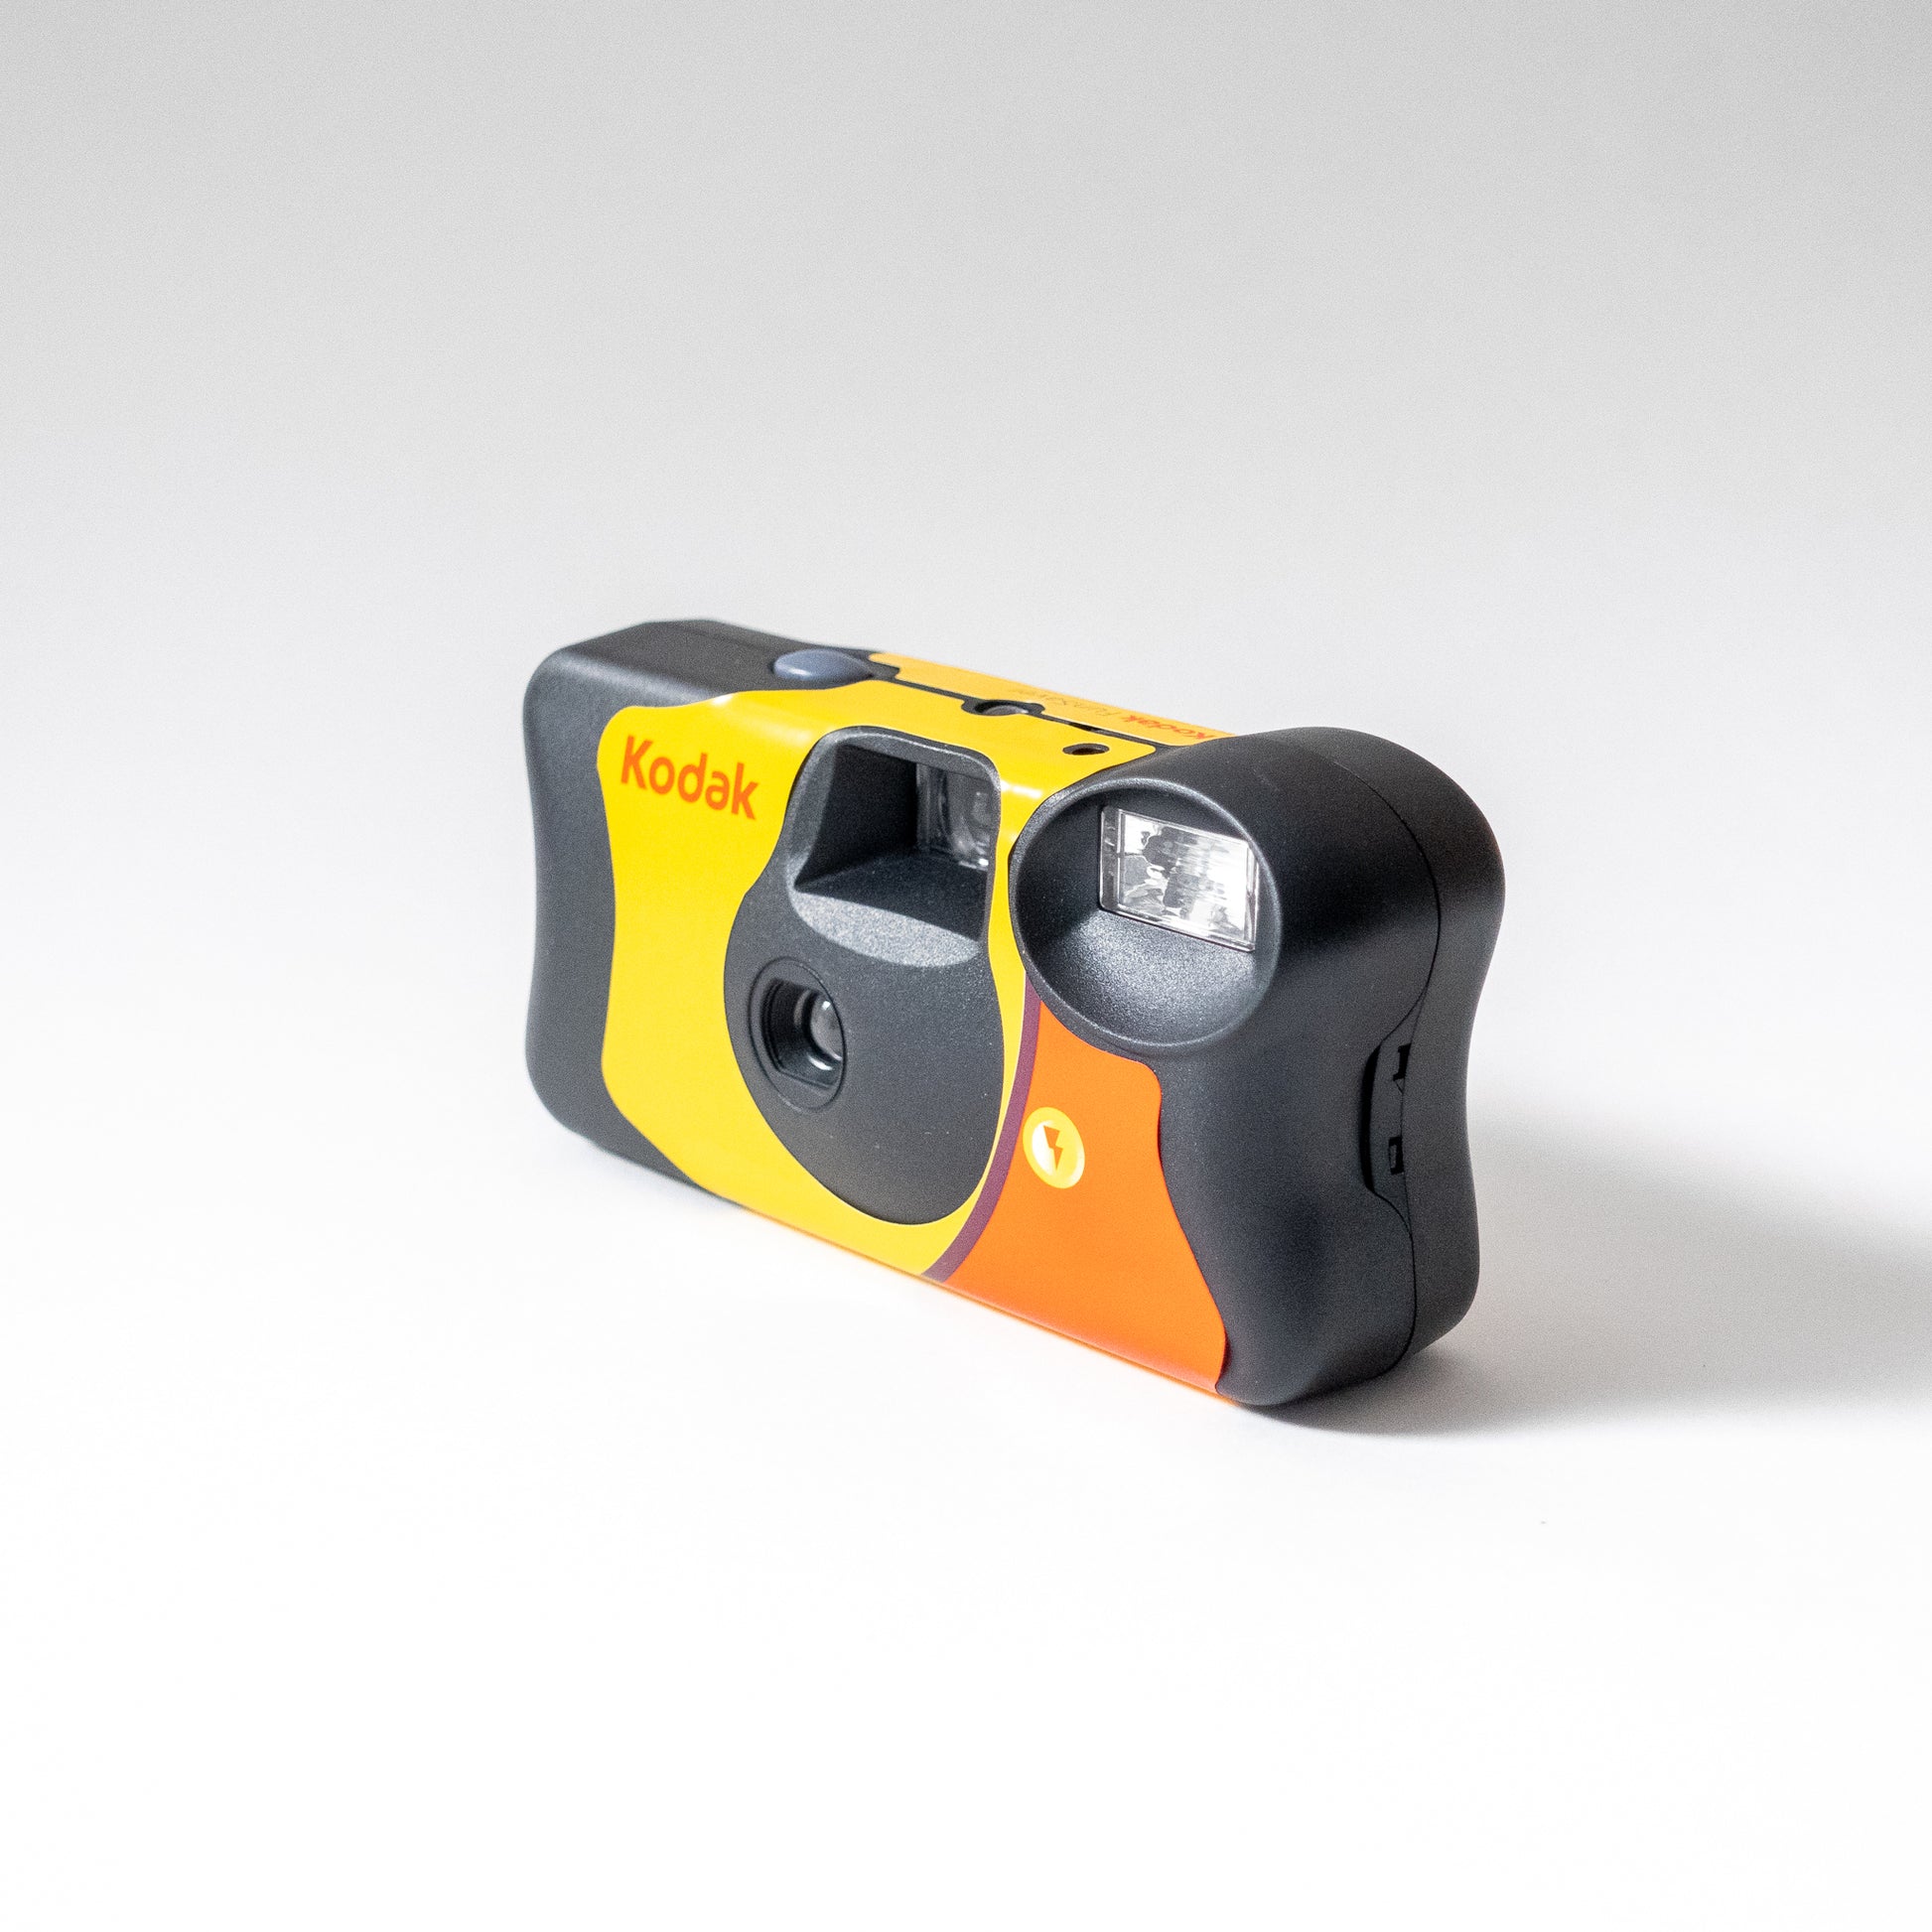 Kodak Fun Saver Disposable Single Use Camera